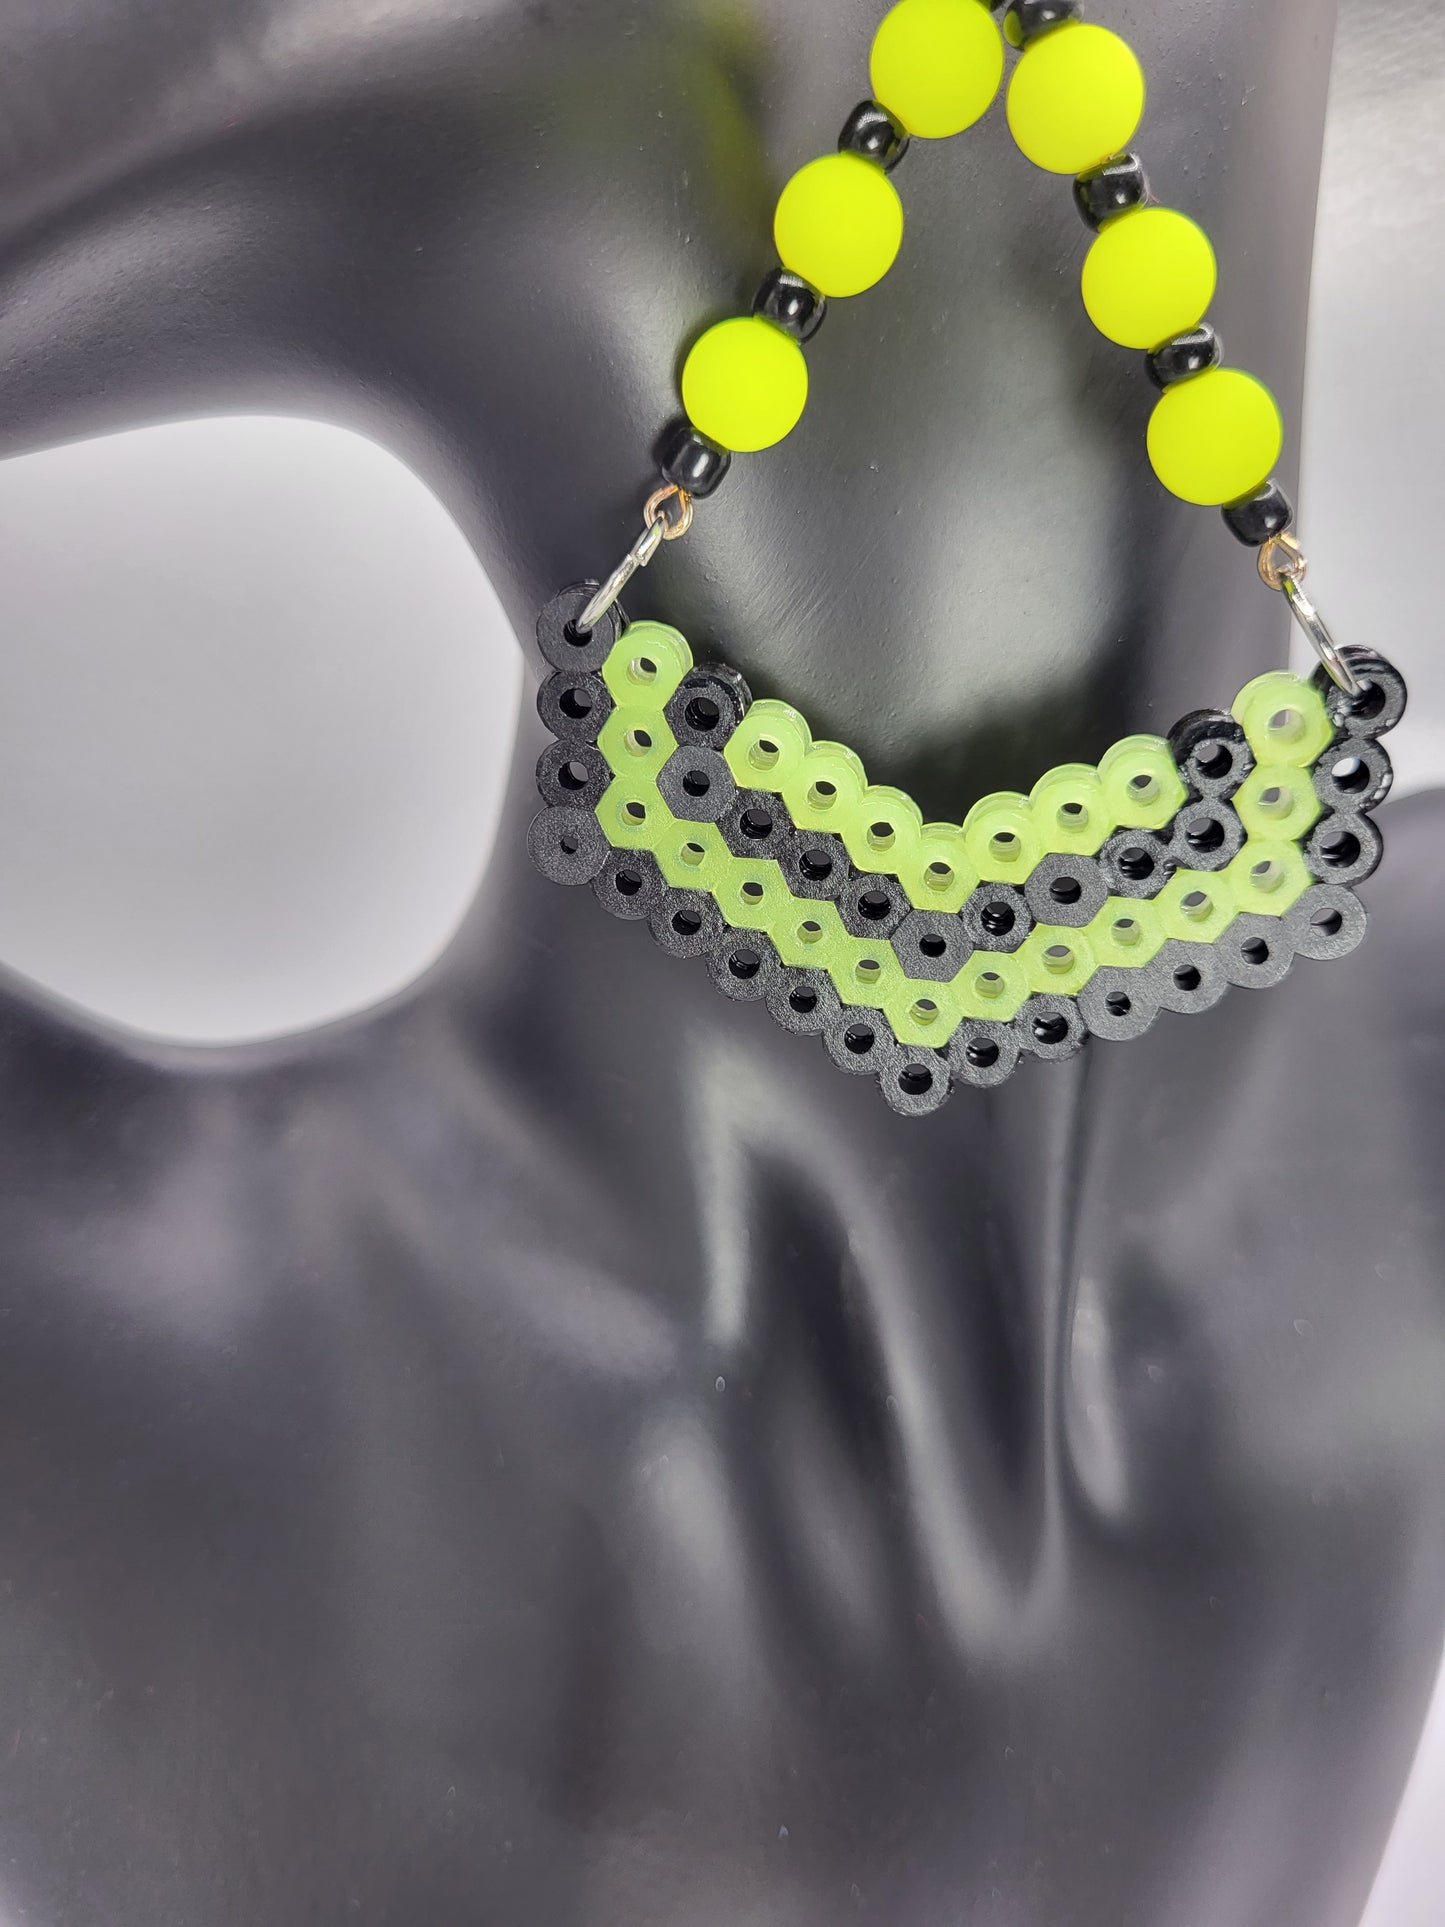 Shade Cyberpunk Glow In The Dark Perler Bead Earrings